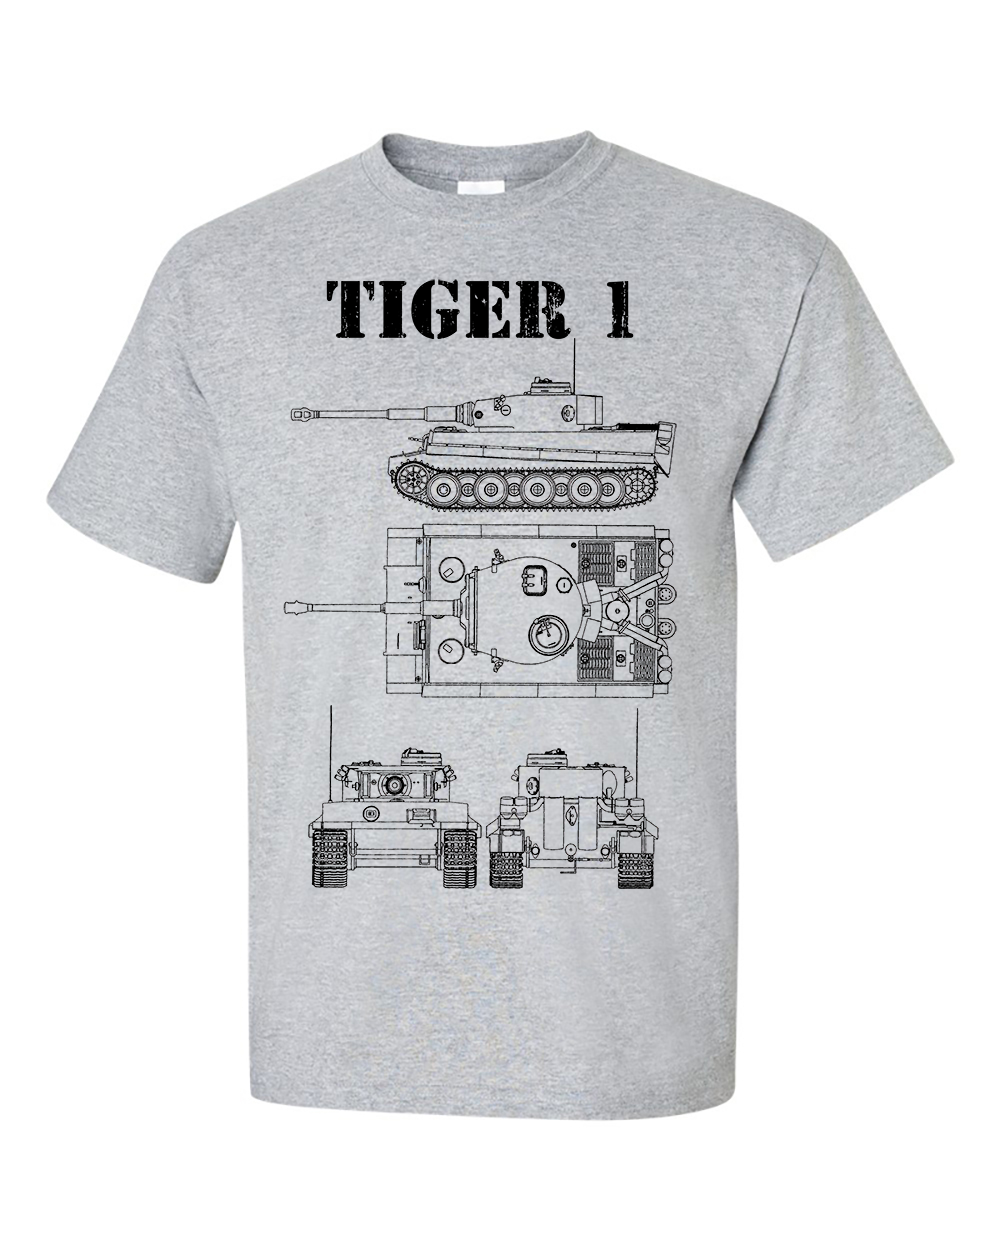 Tiger 1 Tank T-Shirt Technical Drawing Blueprint WW2 German Army Shirt